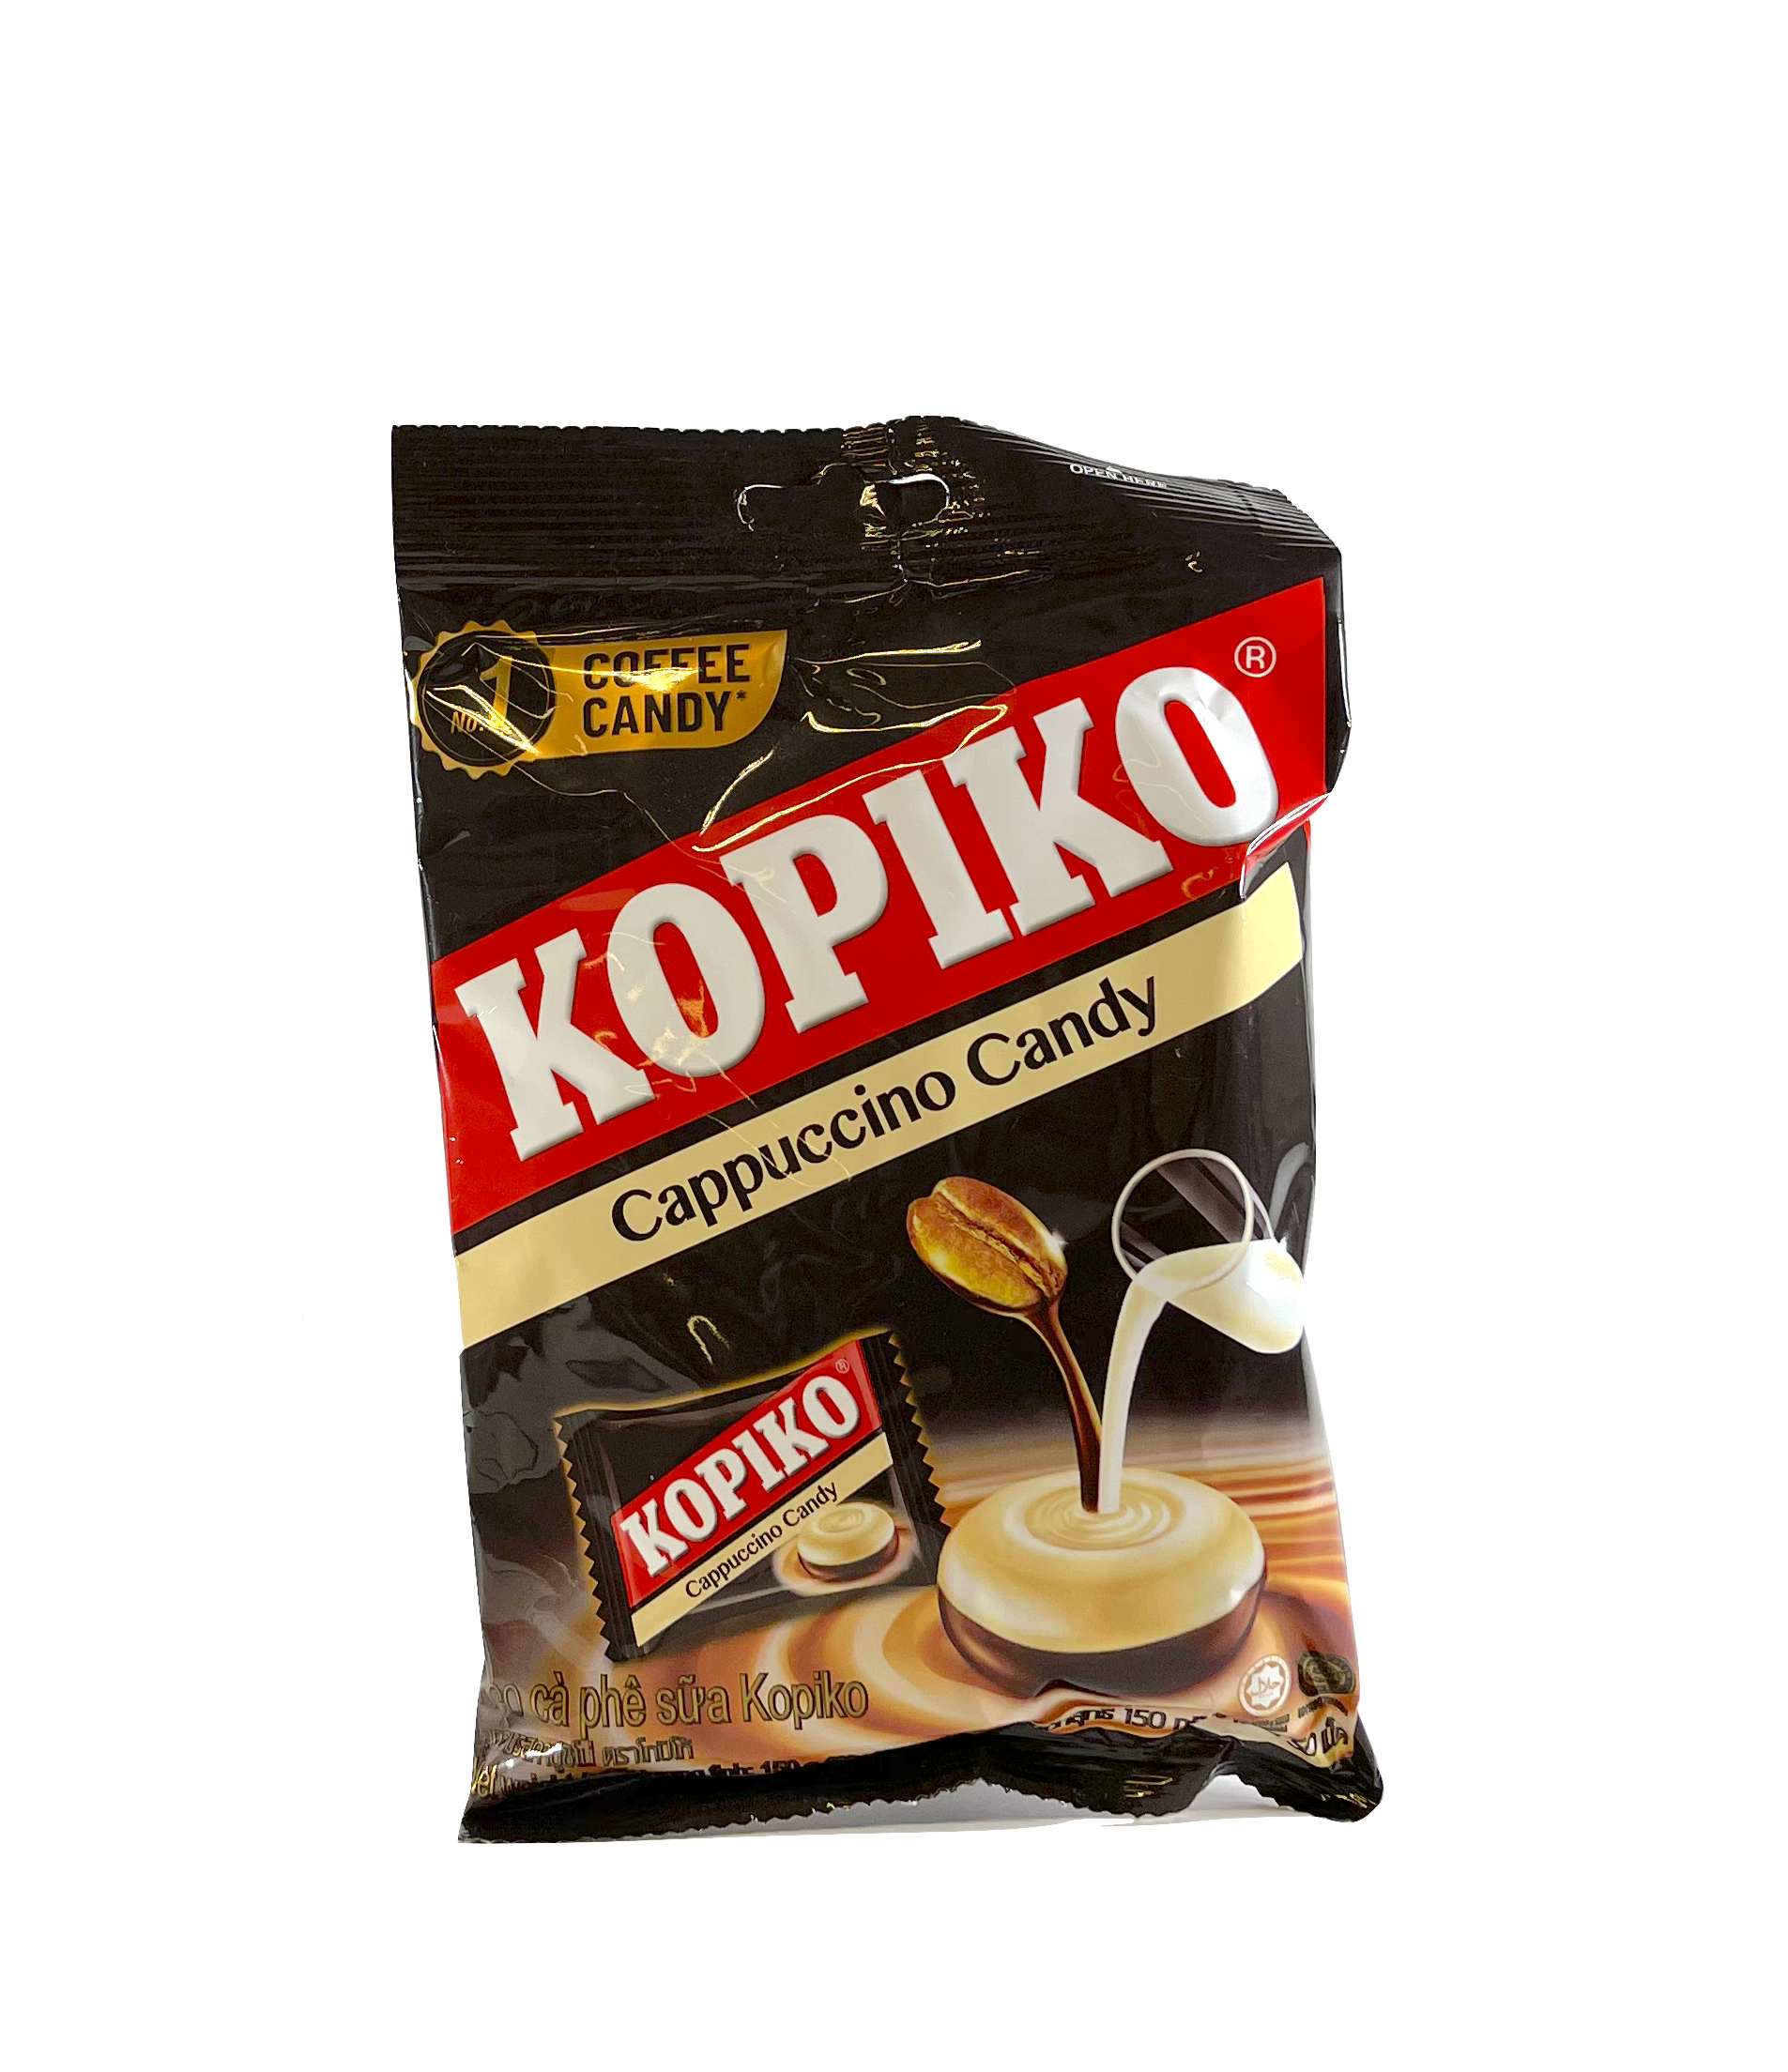 Candy Coffee Cappuccino 175g Kopiko